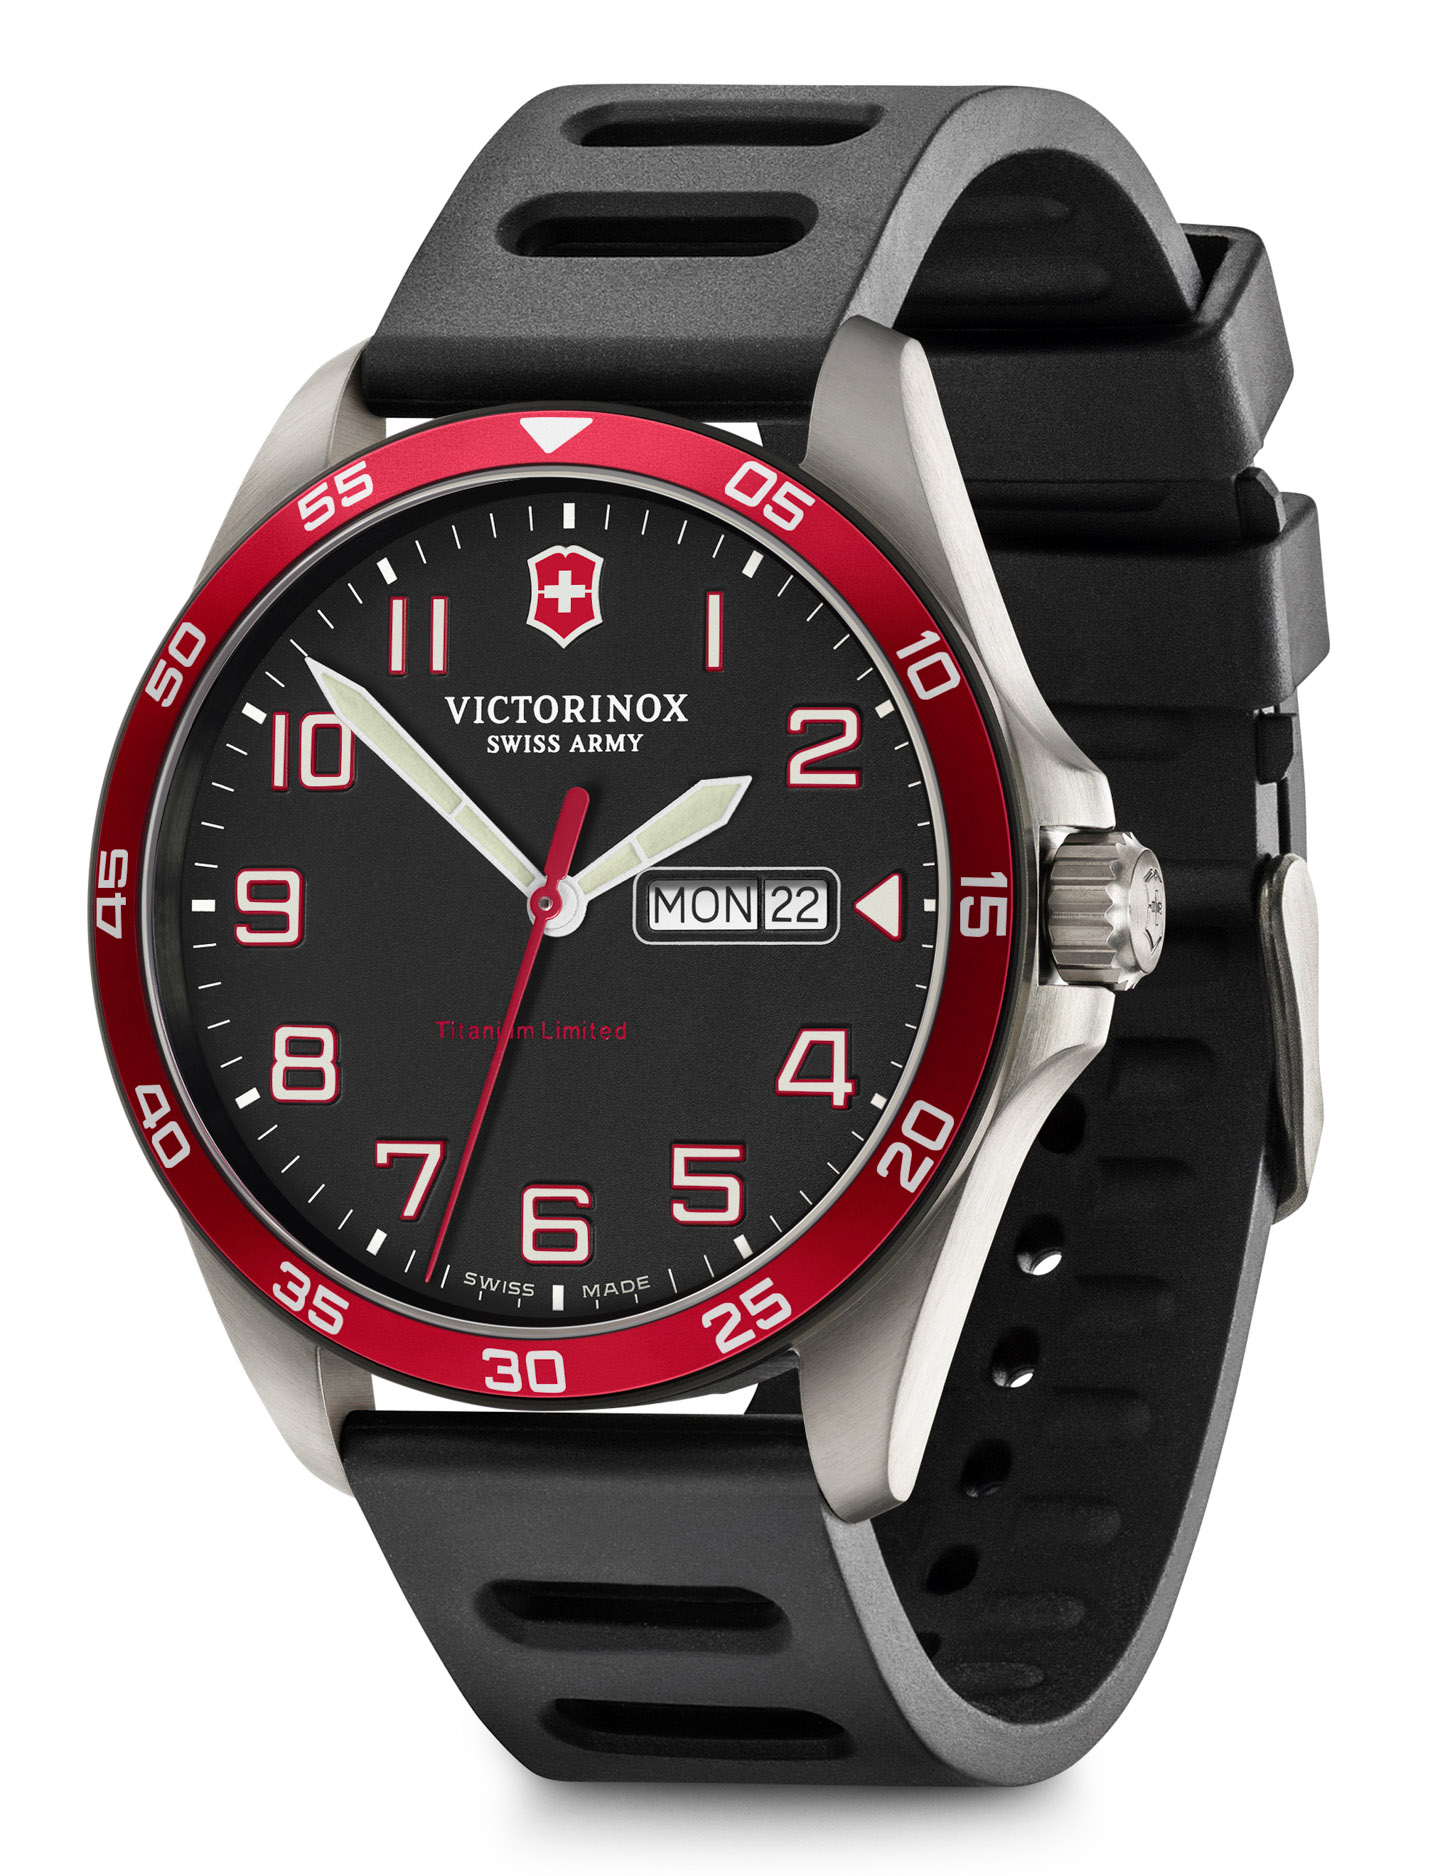 https://www.ablogtowatch.com/wp-content/uploads/2020/11/Victorinox-Swiss-Army-FieldForce-Sport-Titanium-LE-watch-4.jpg